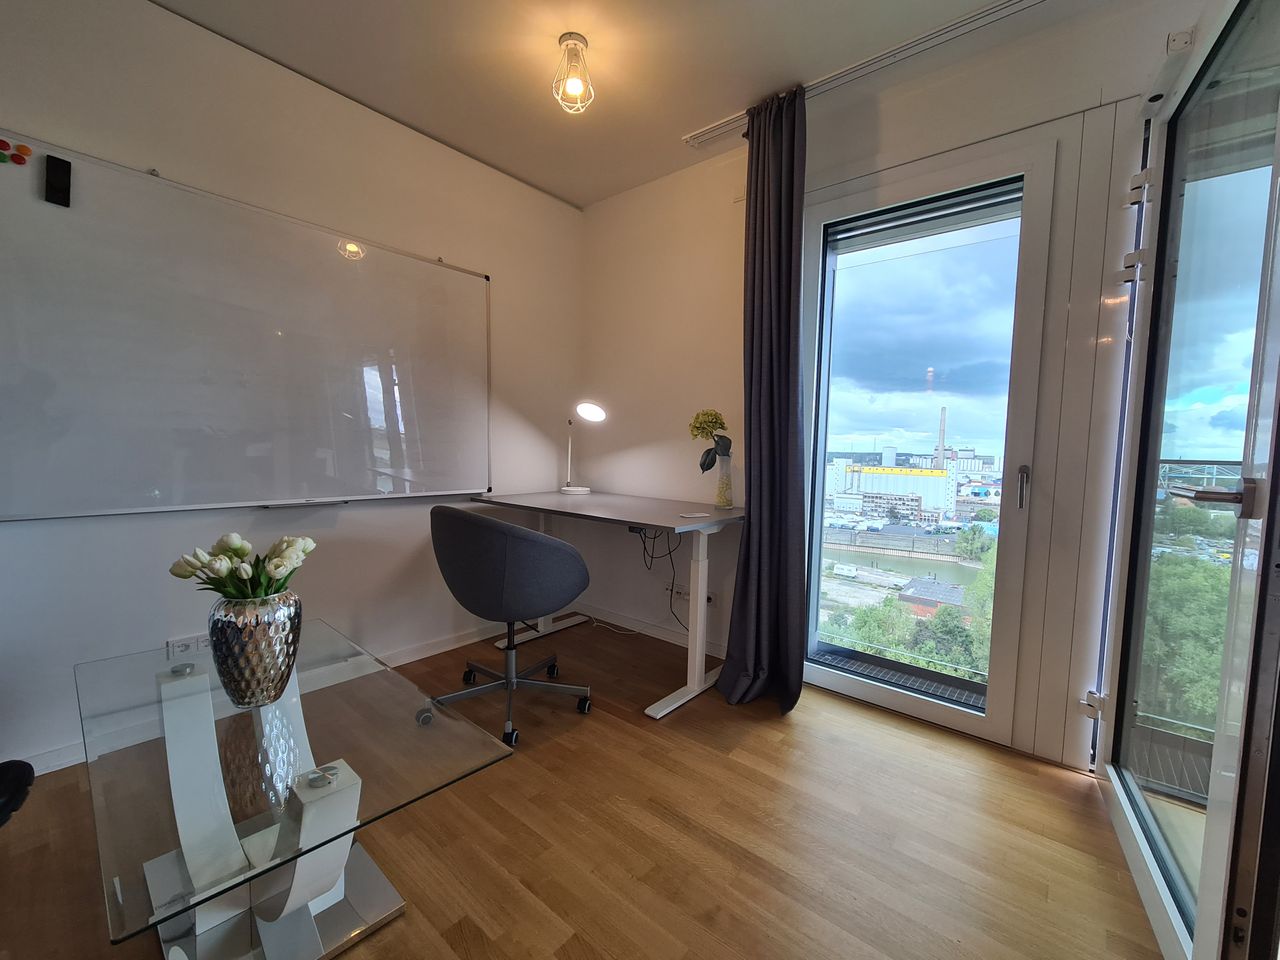 Neat, pretty suite located in Düsseldorf